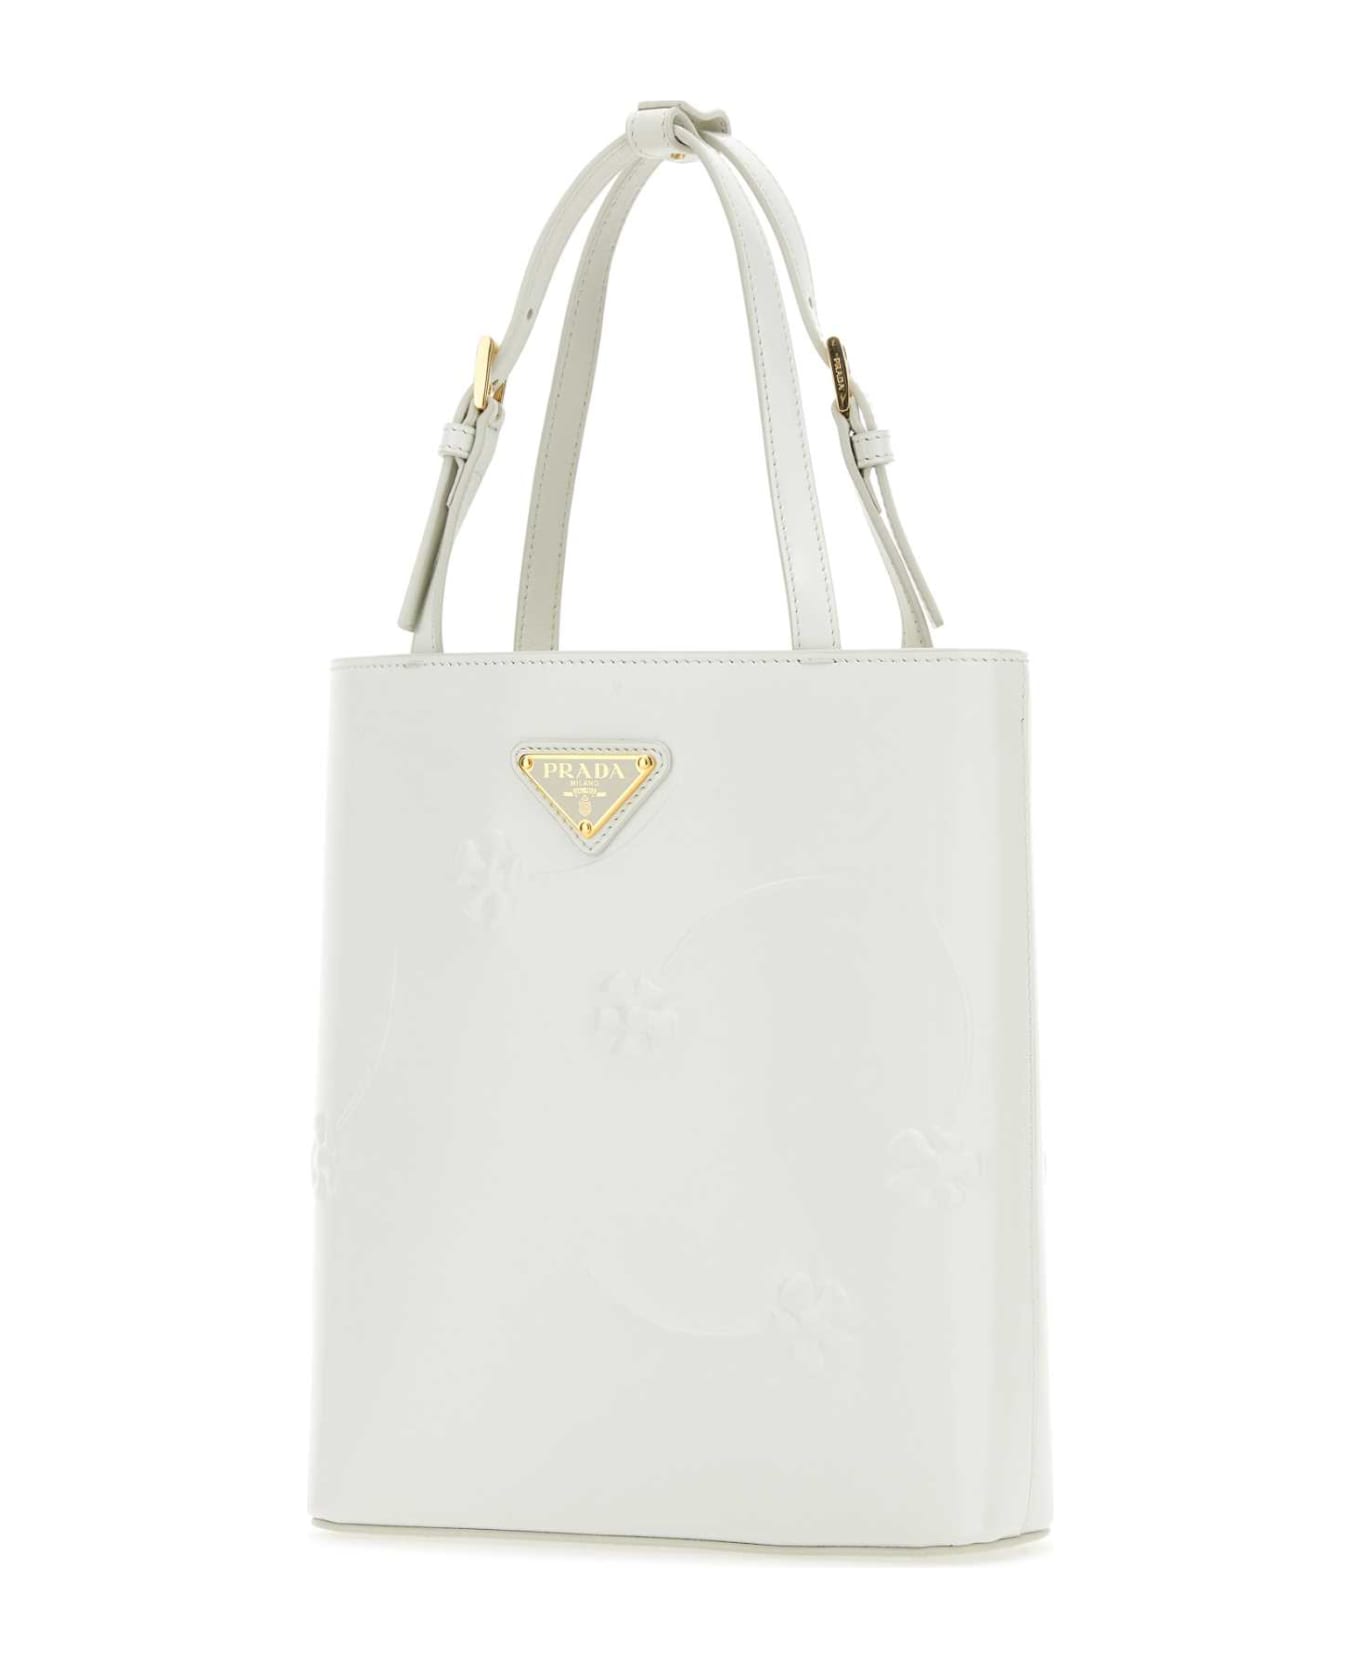 Prada White Leather Handbag - White